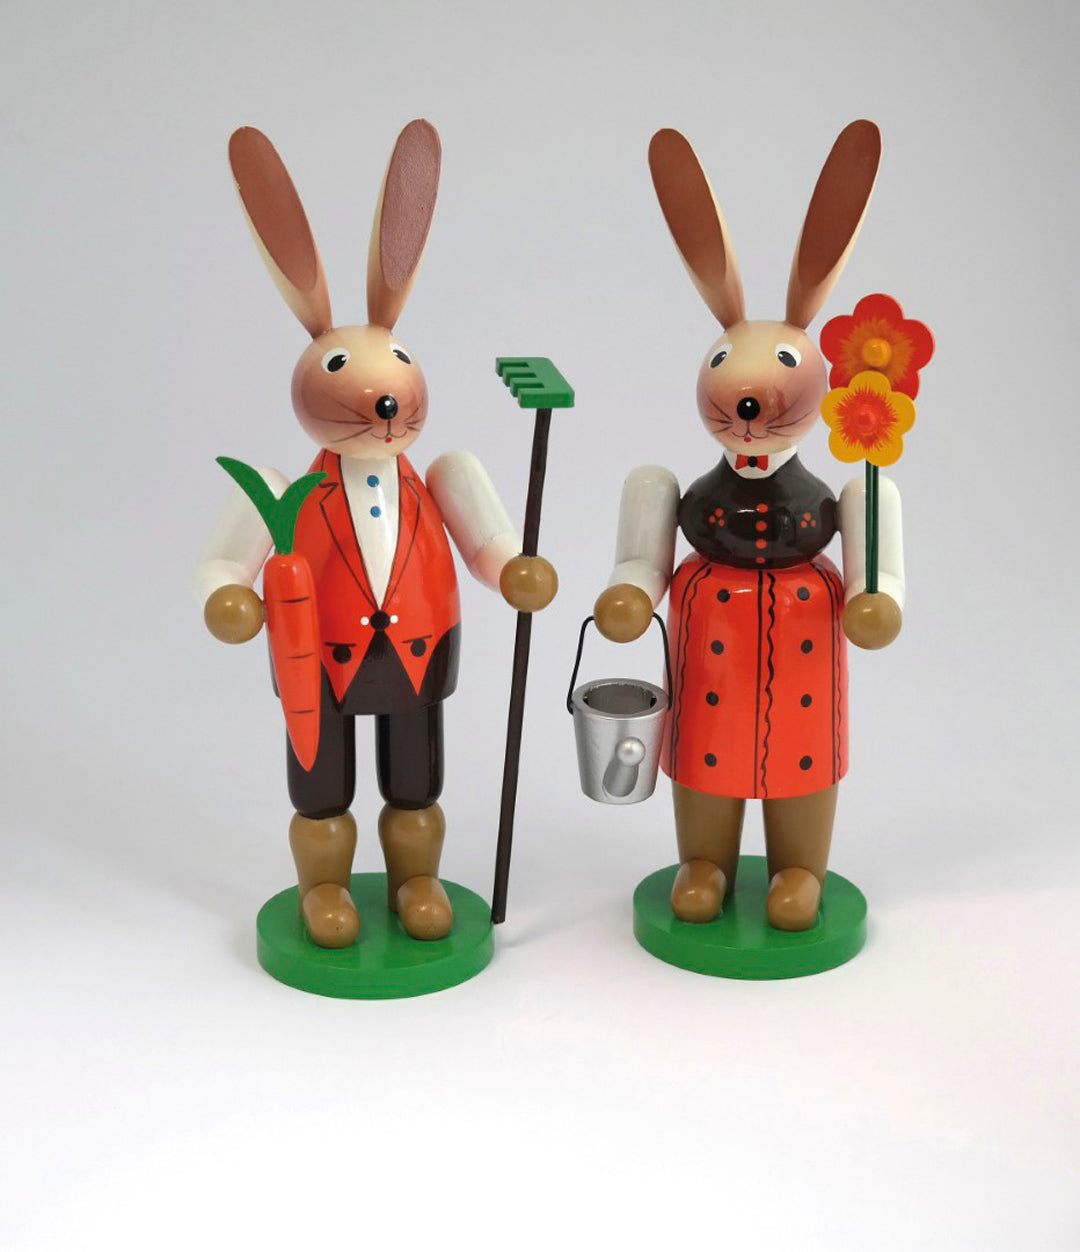 Easter bunny gardener and gardener